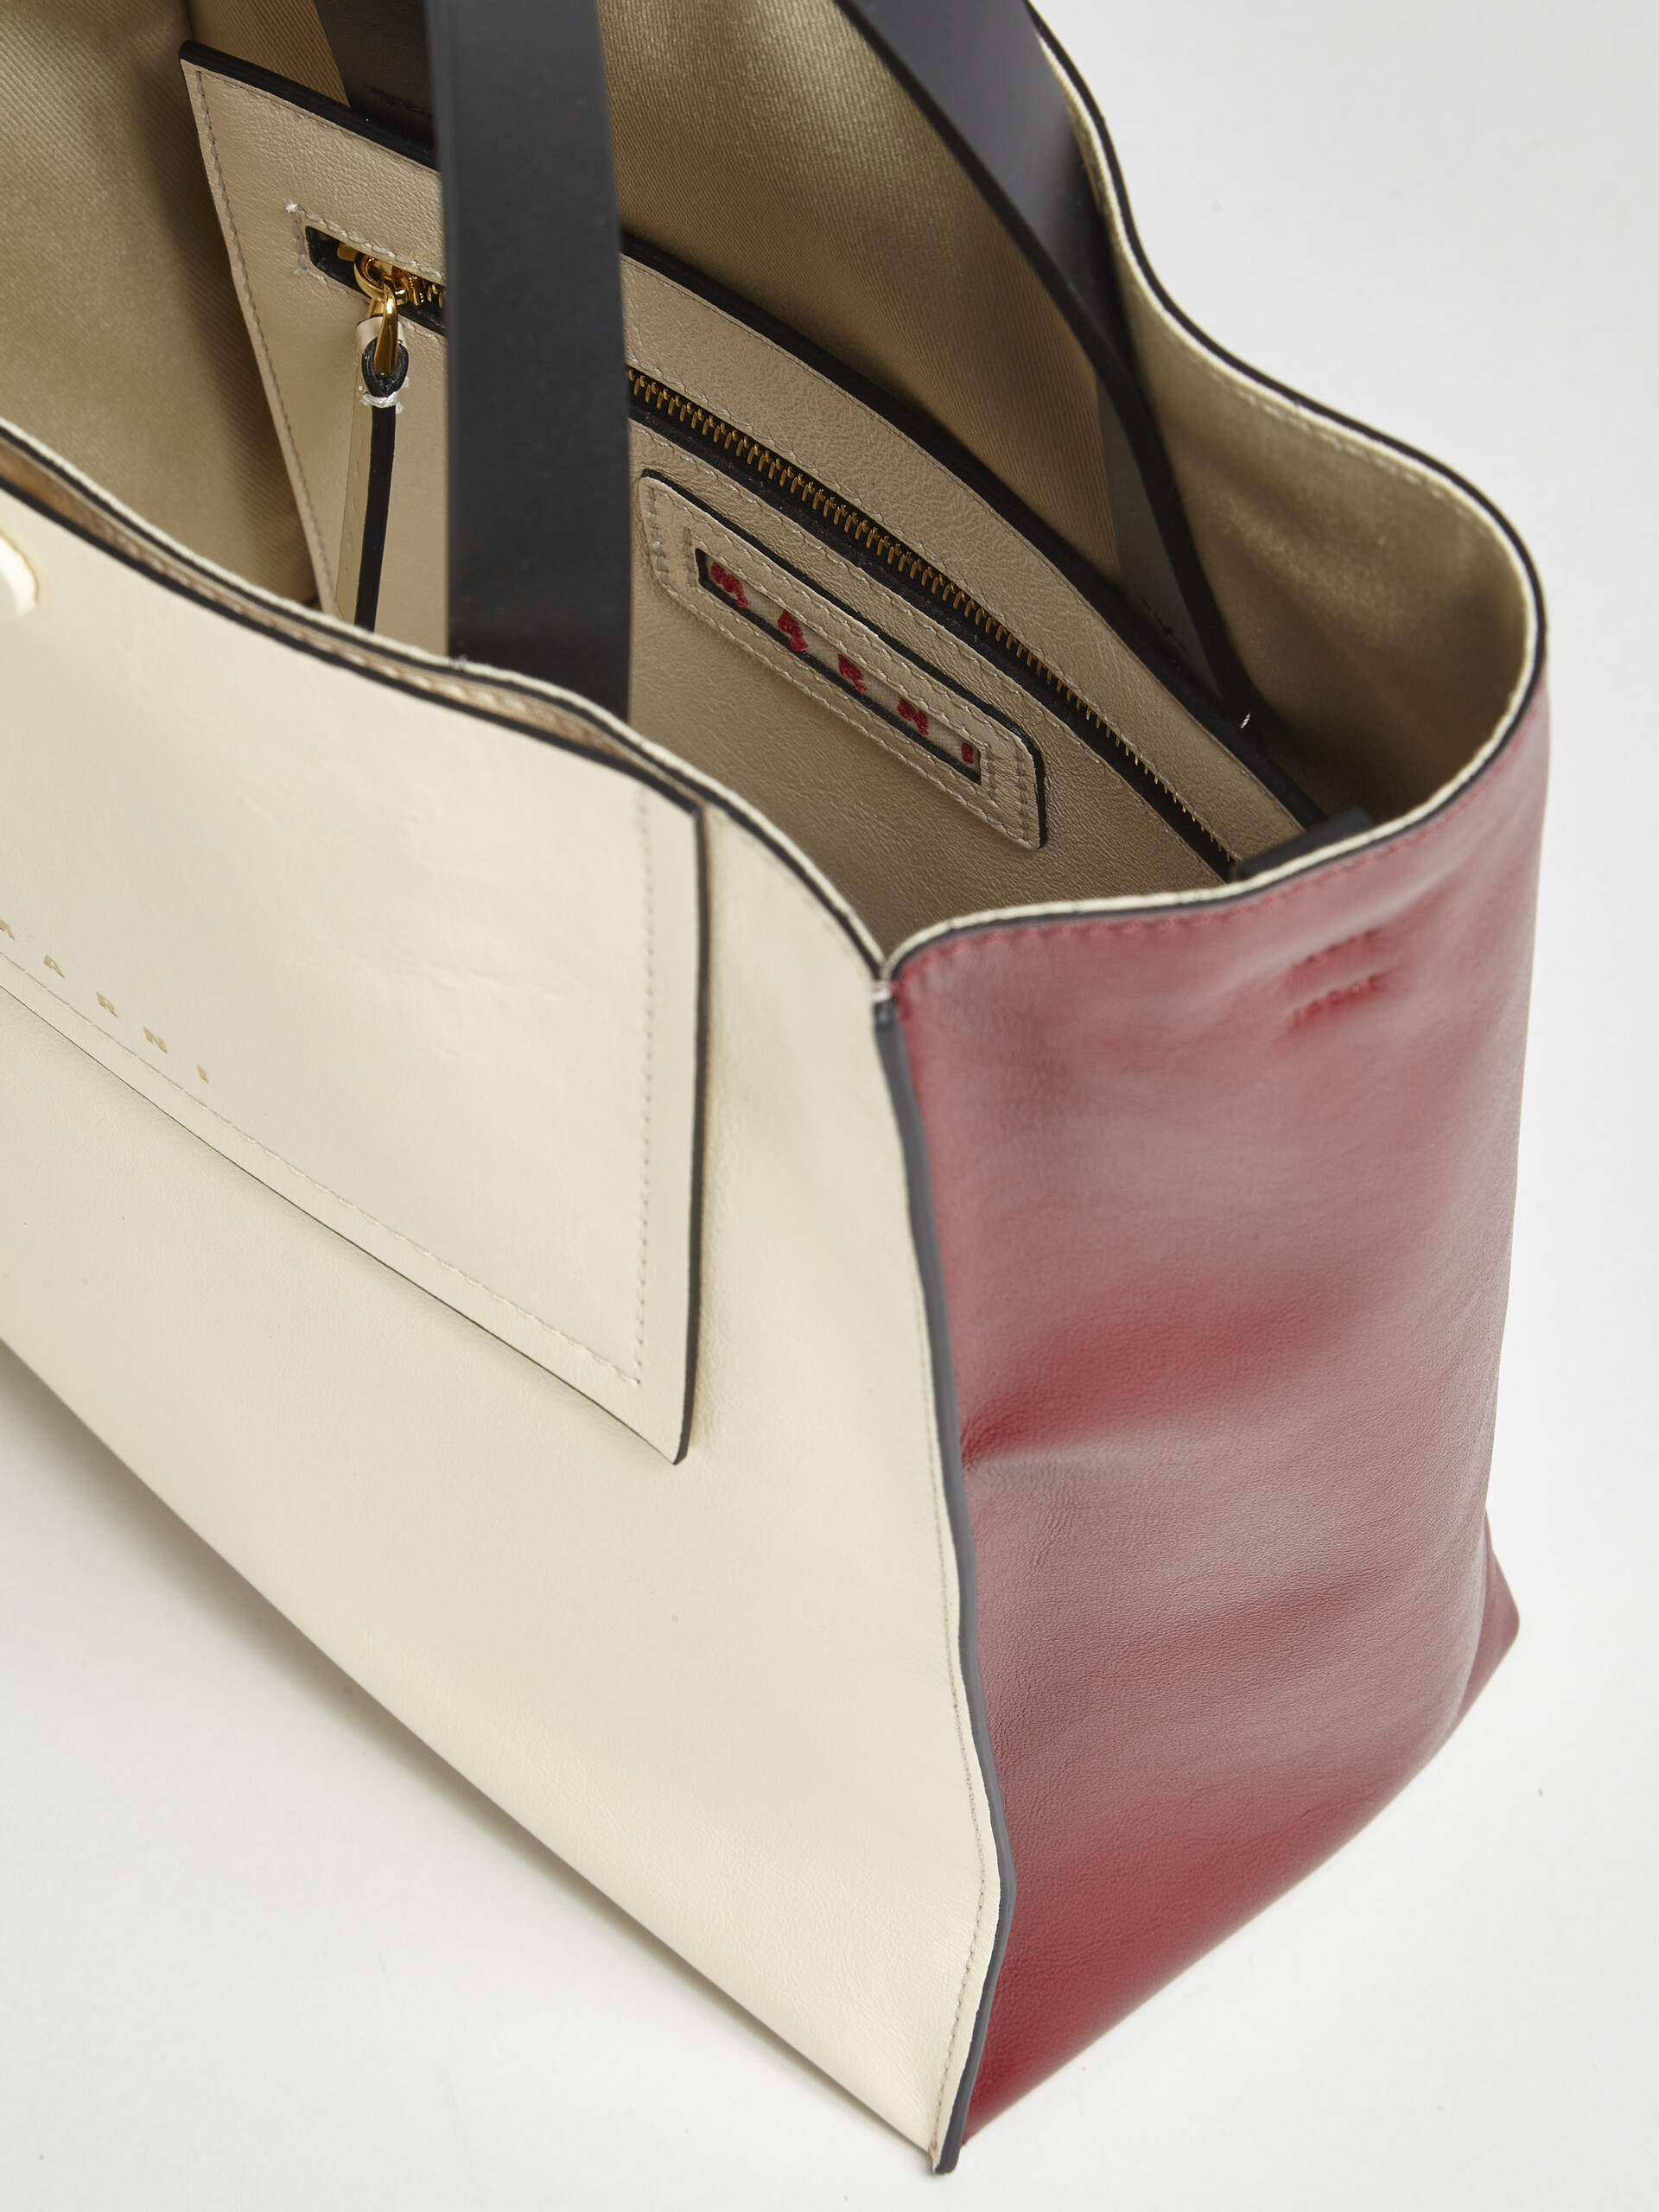 MUSEO SOFT bag piccola in pelle bianca e rosso - Borse shopping - Image 3